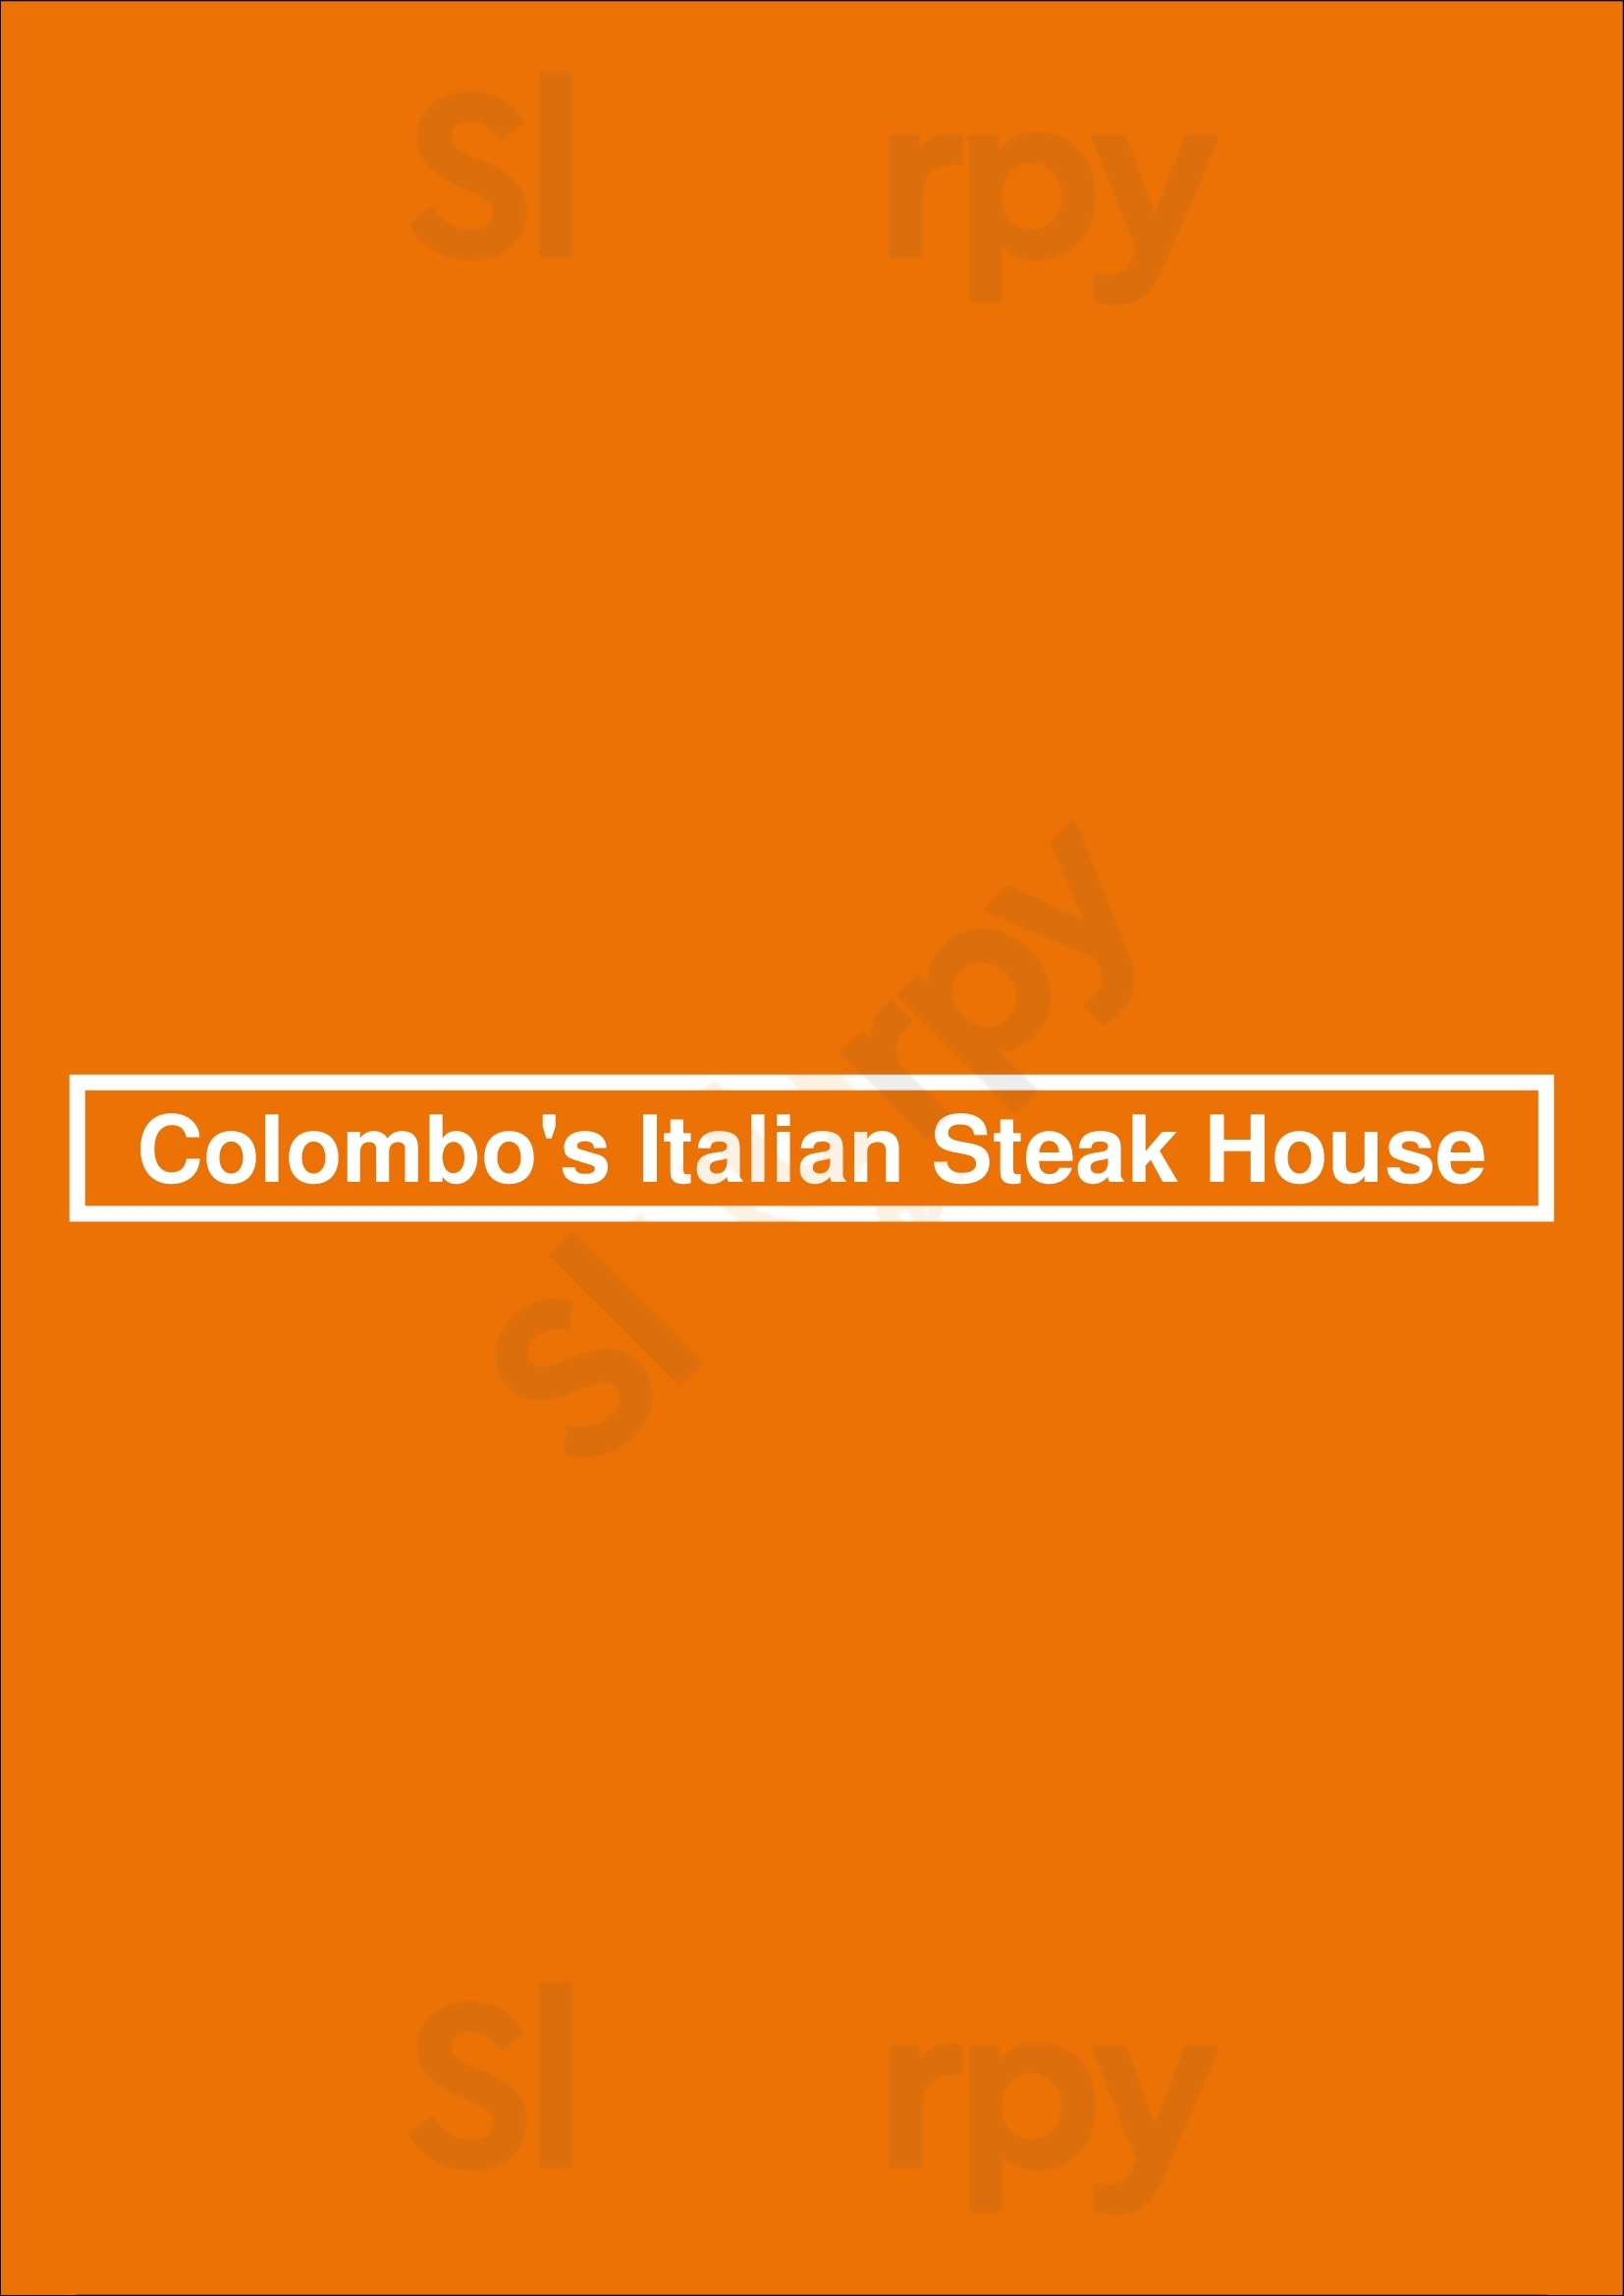 Colombo's Italian Steak House Los Angeles Menu - 1